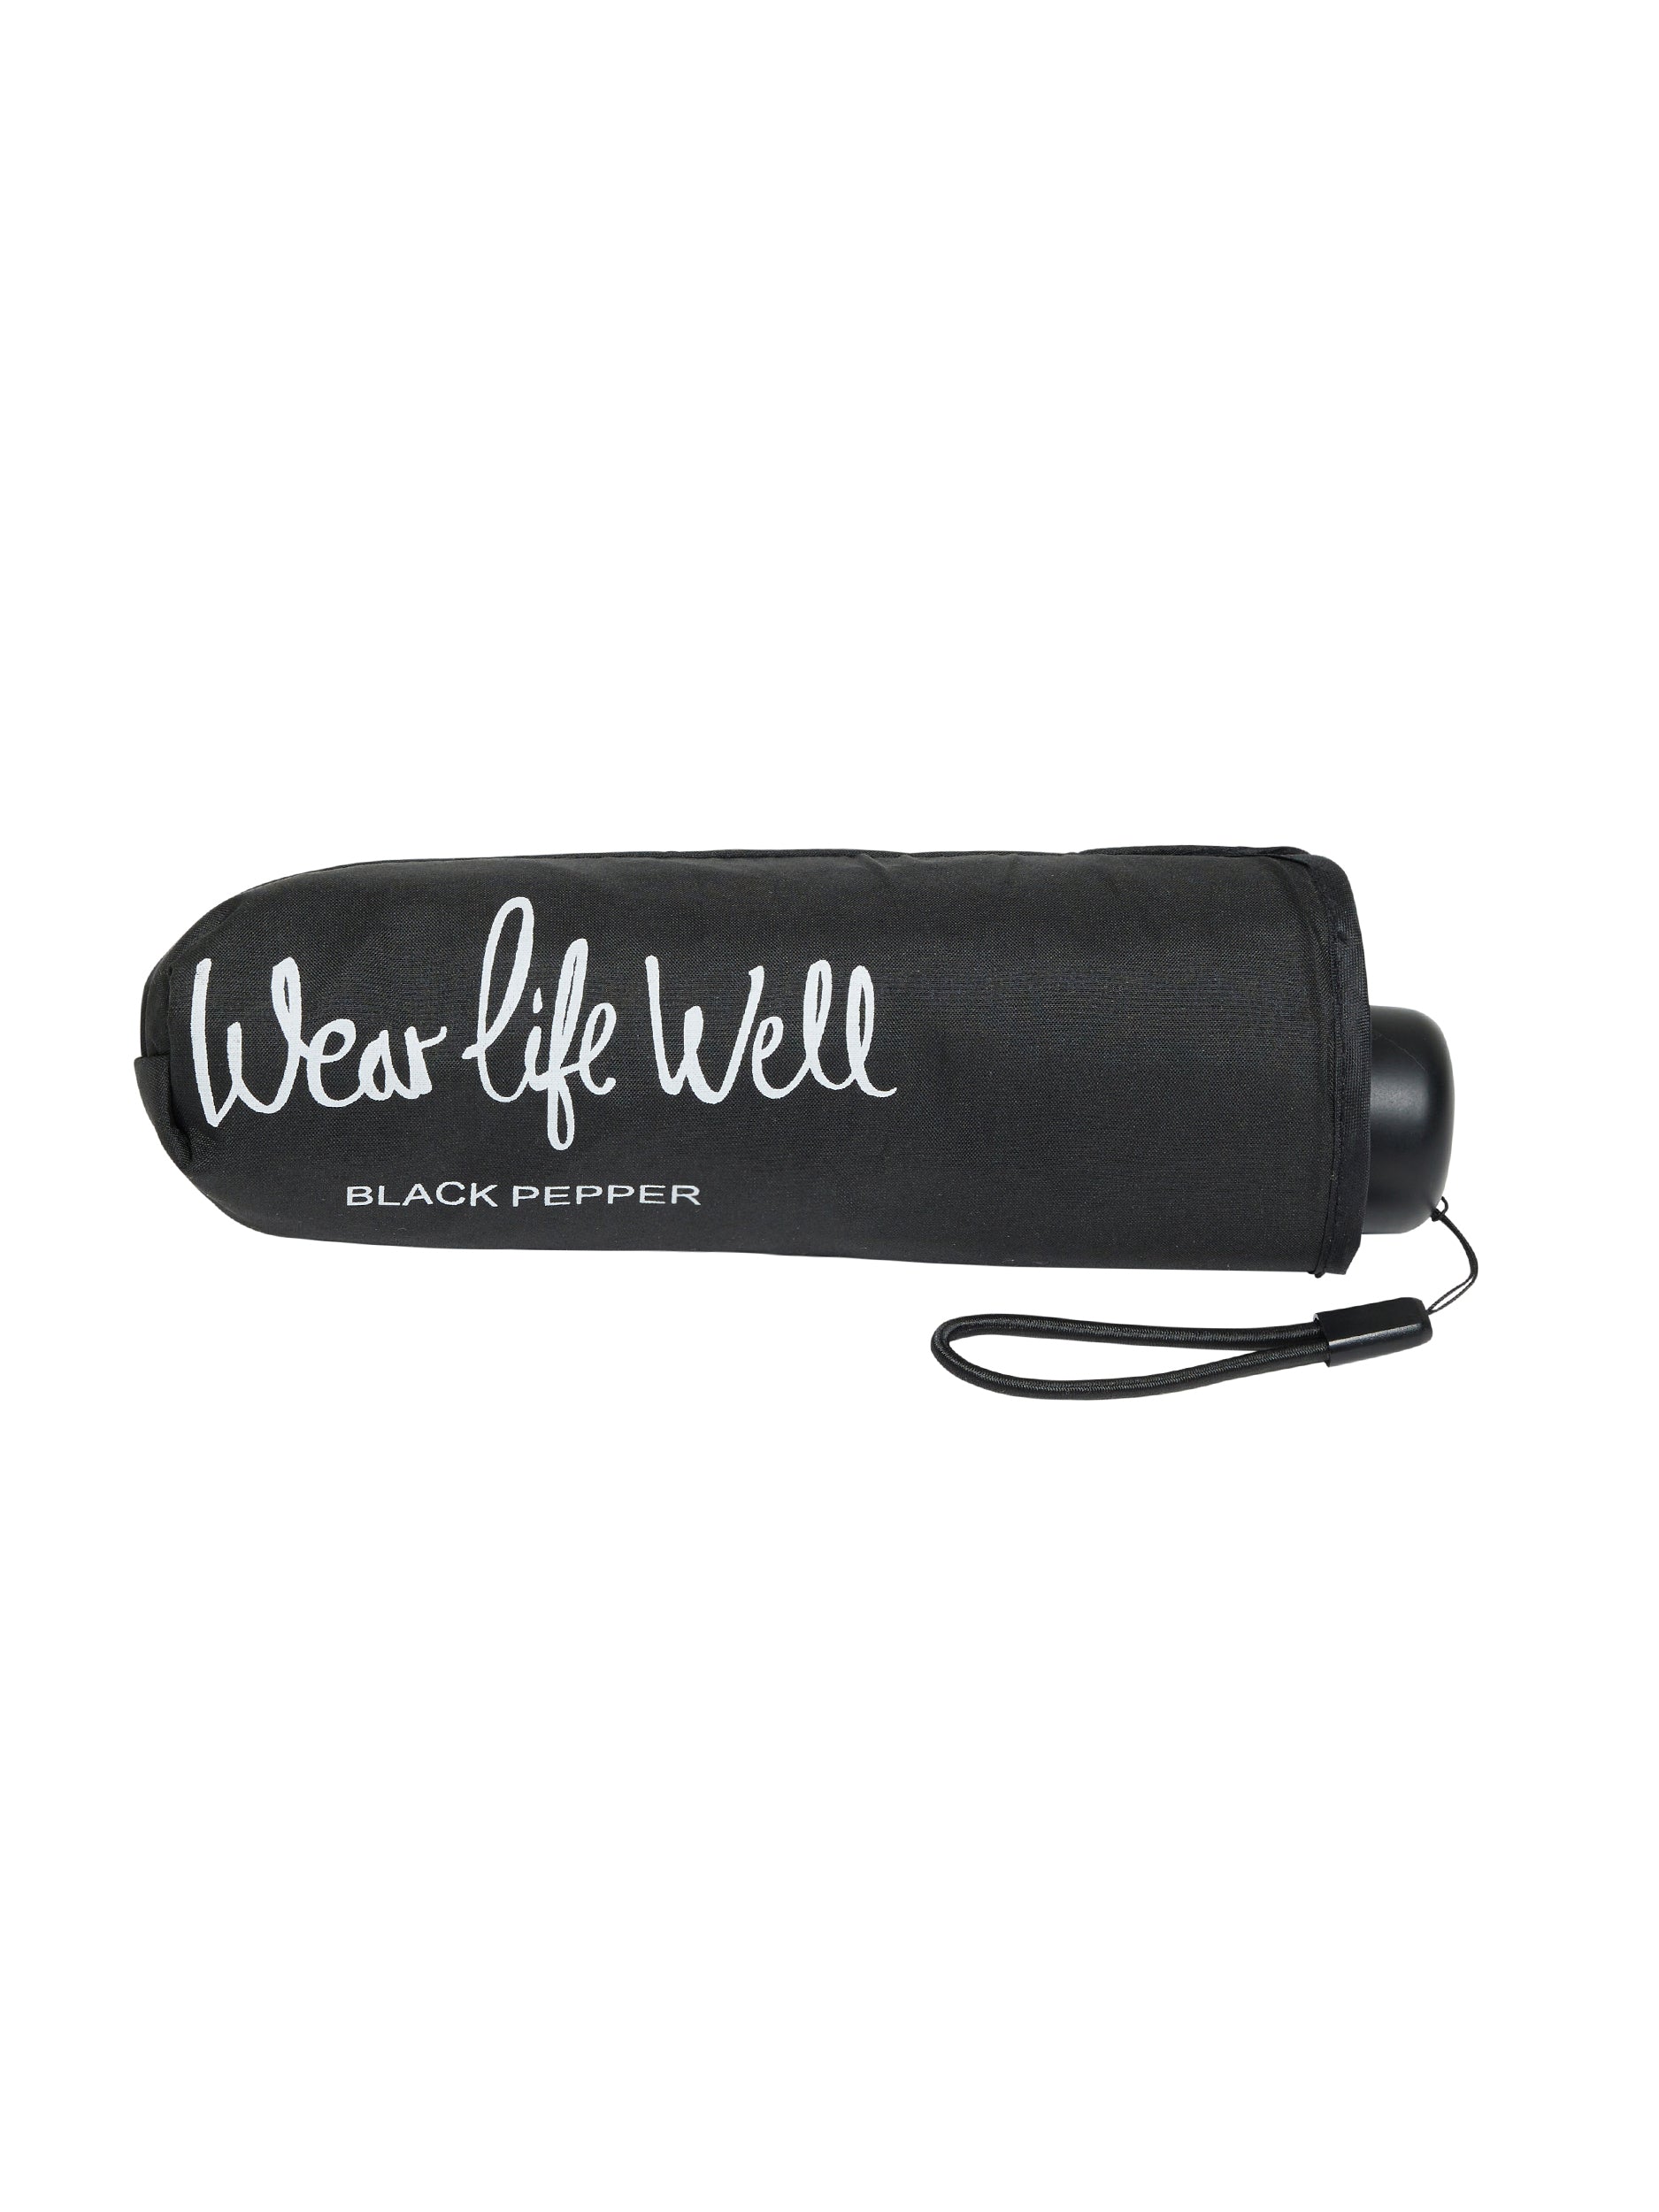 Wear Life Well Logo Fold Up Umbrella in Black – Black Pepper